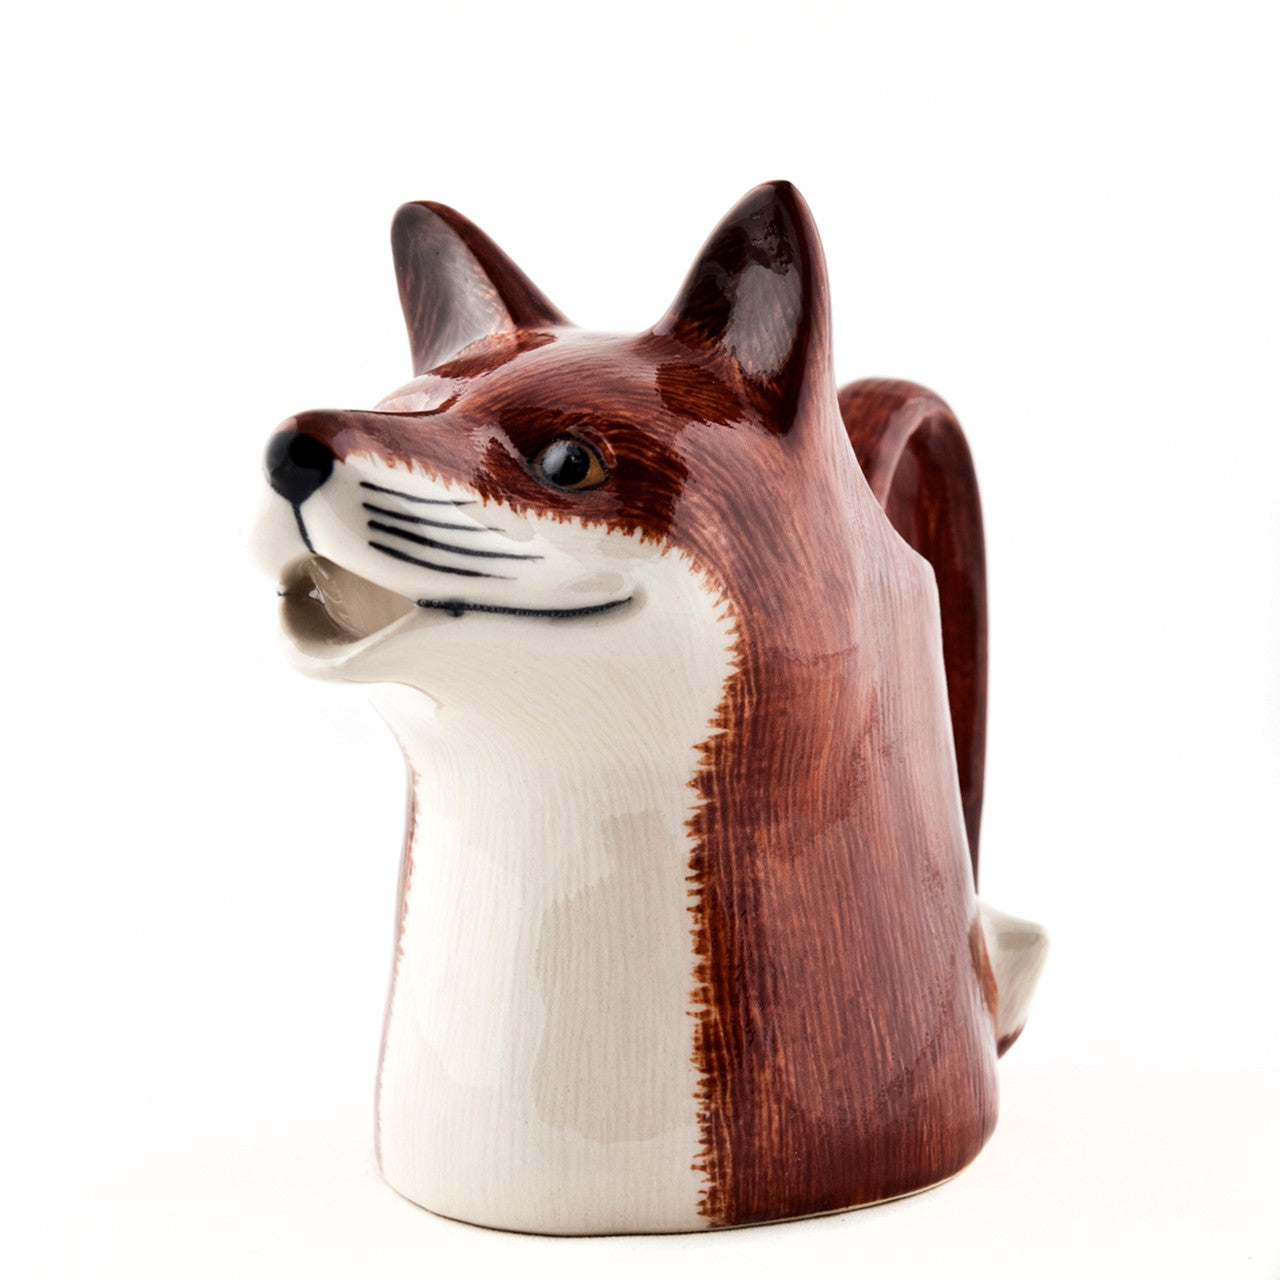 A Quail Woodland Animal Jug with a ceramic fox head on a white background, showcasing traditional British design.